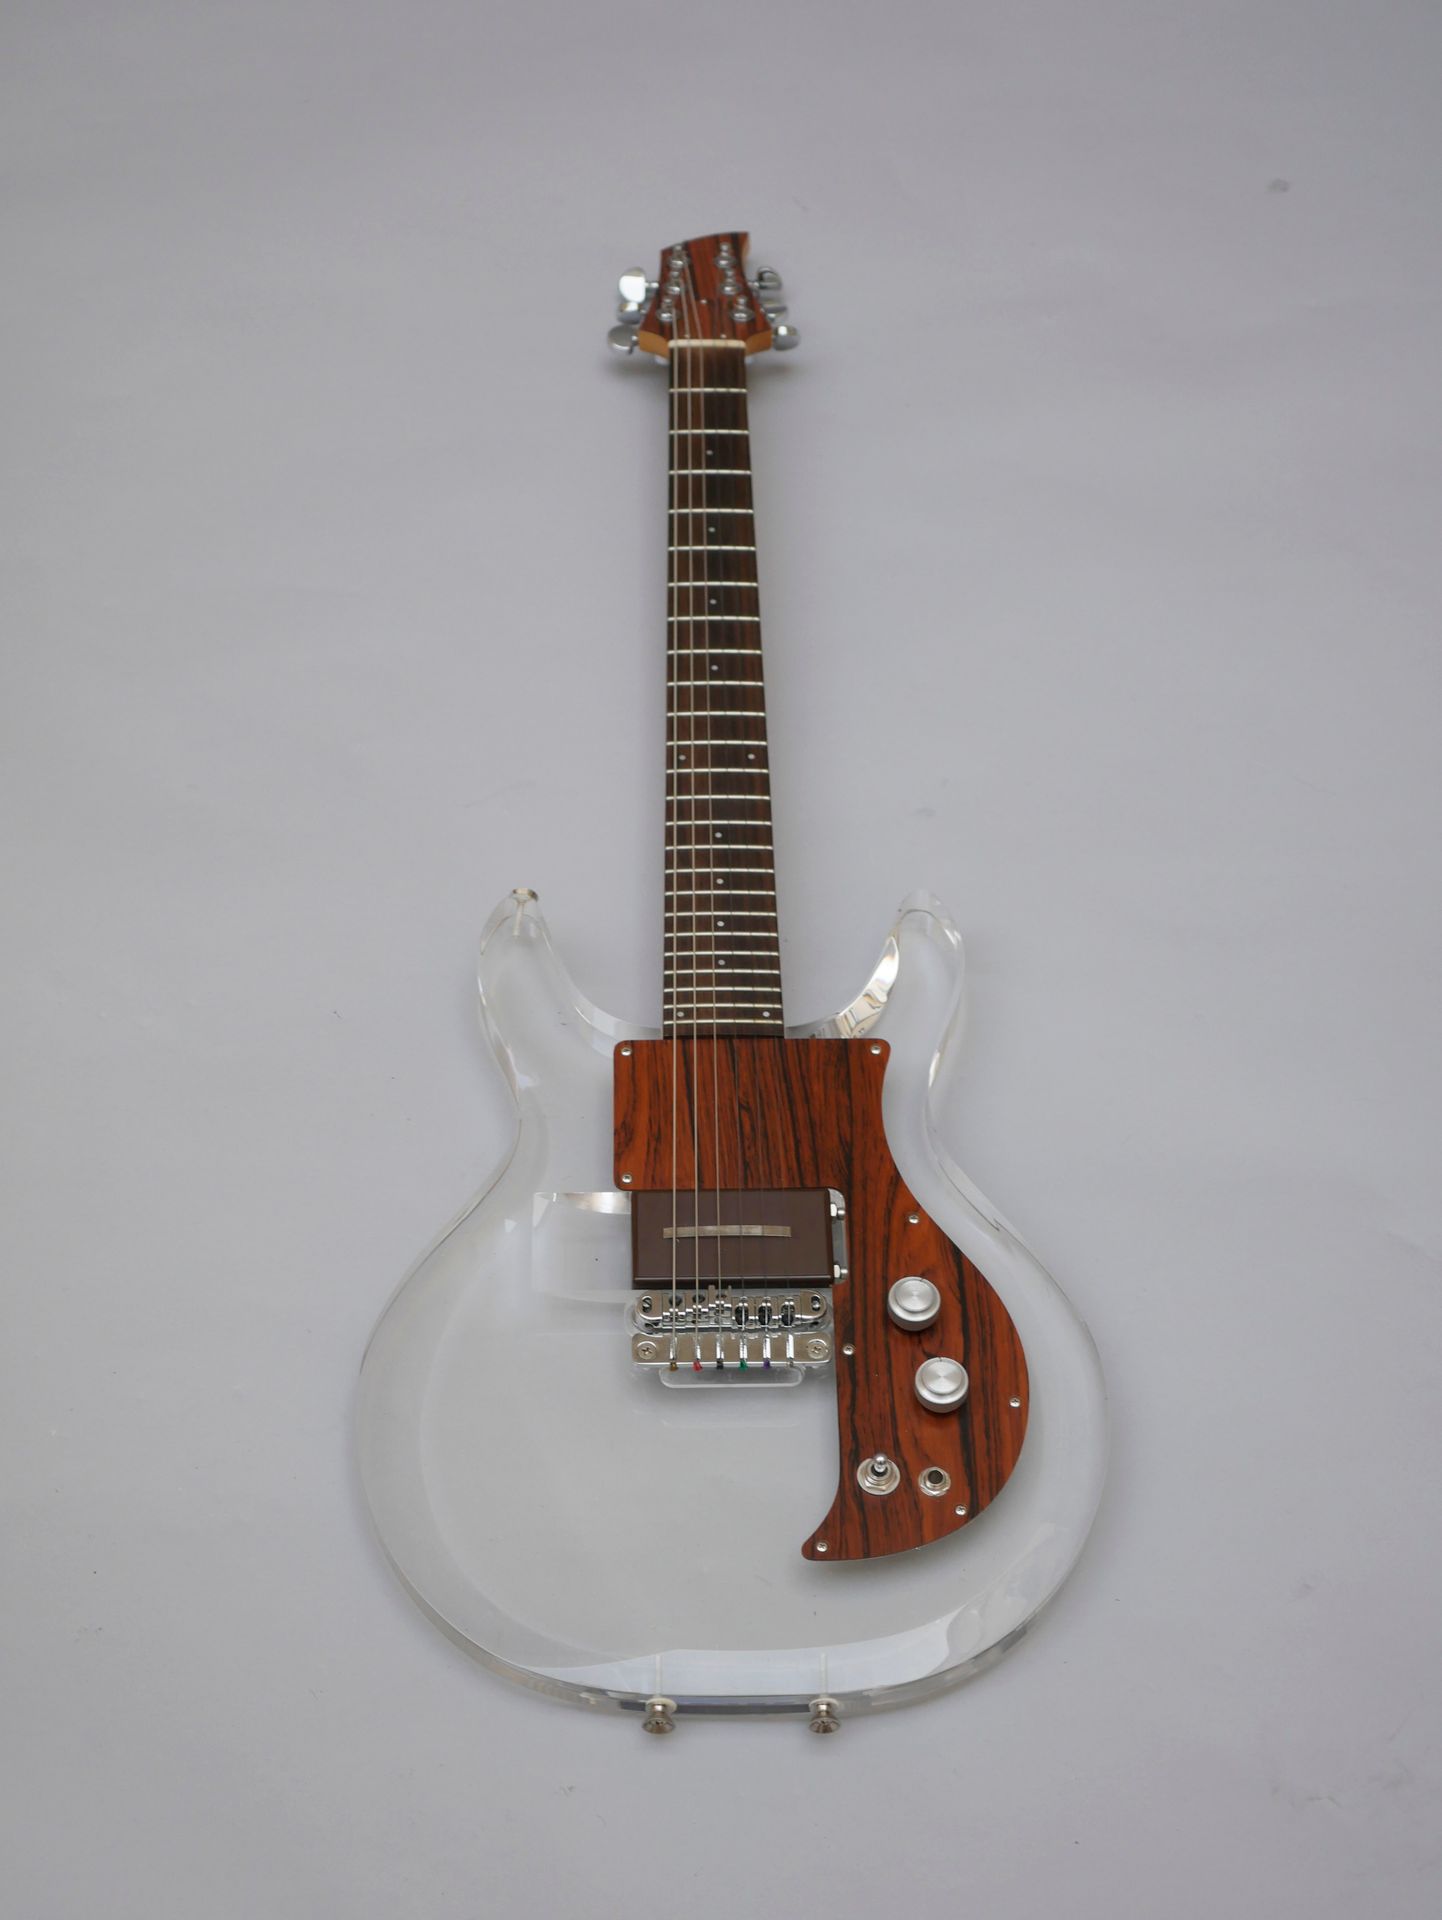 Null 实体Altuglass电吉他 "Ampeg Dan Armstrong "和备用拾音器。

状况如新，有使用过的痕迹。

(经测试的电子产品)